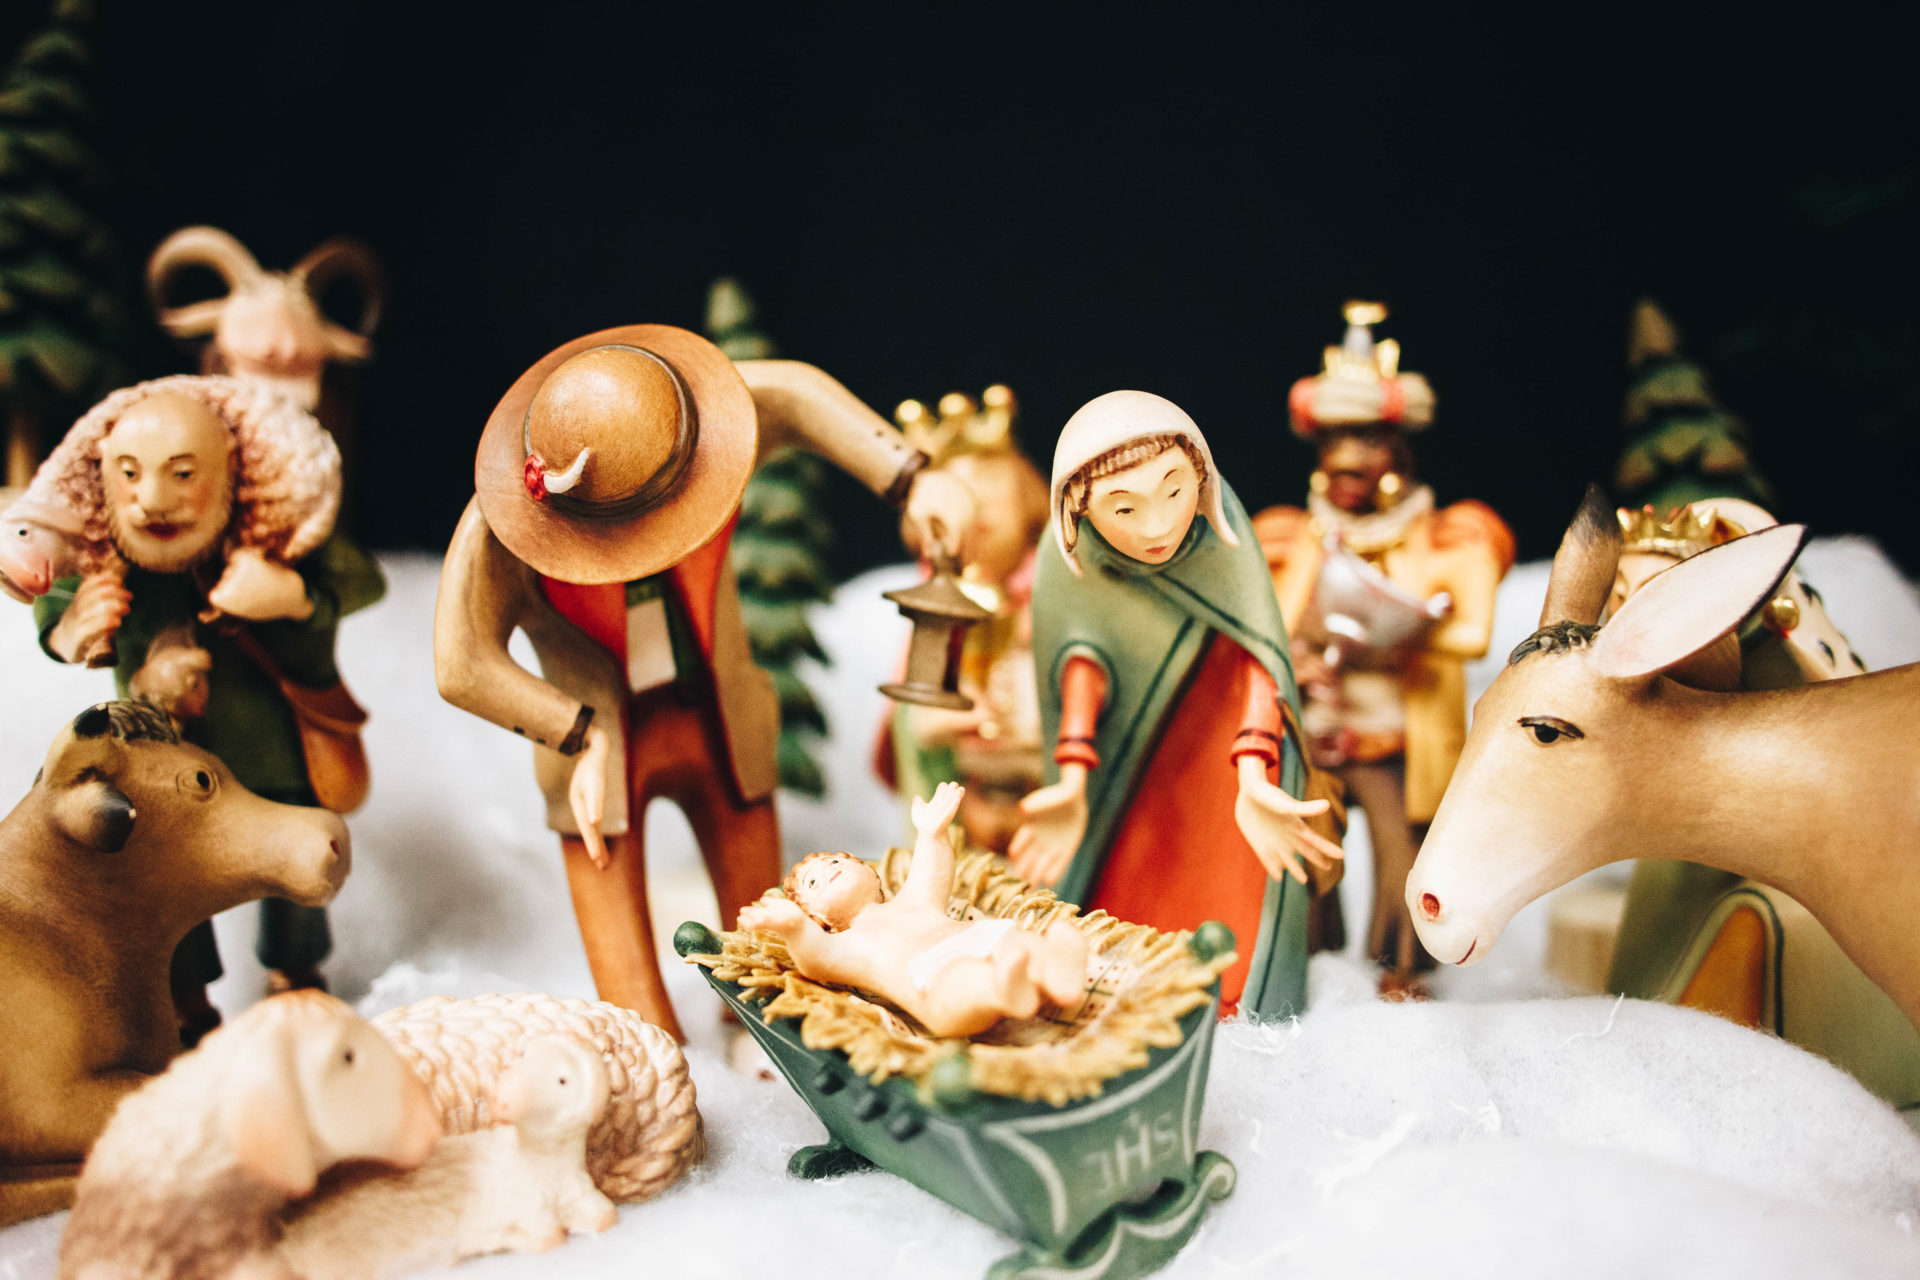 BYU Store nativity exhibit brings Christmas spirit from around the